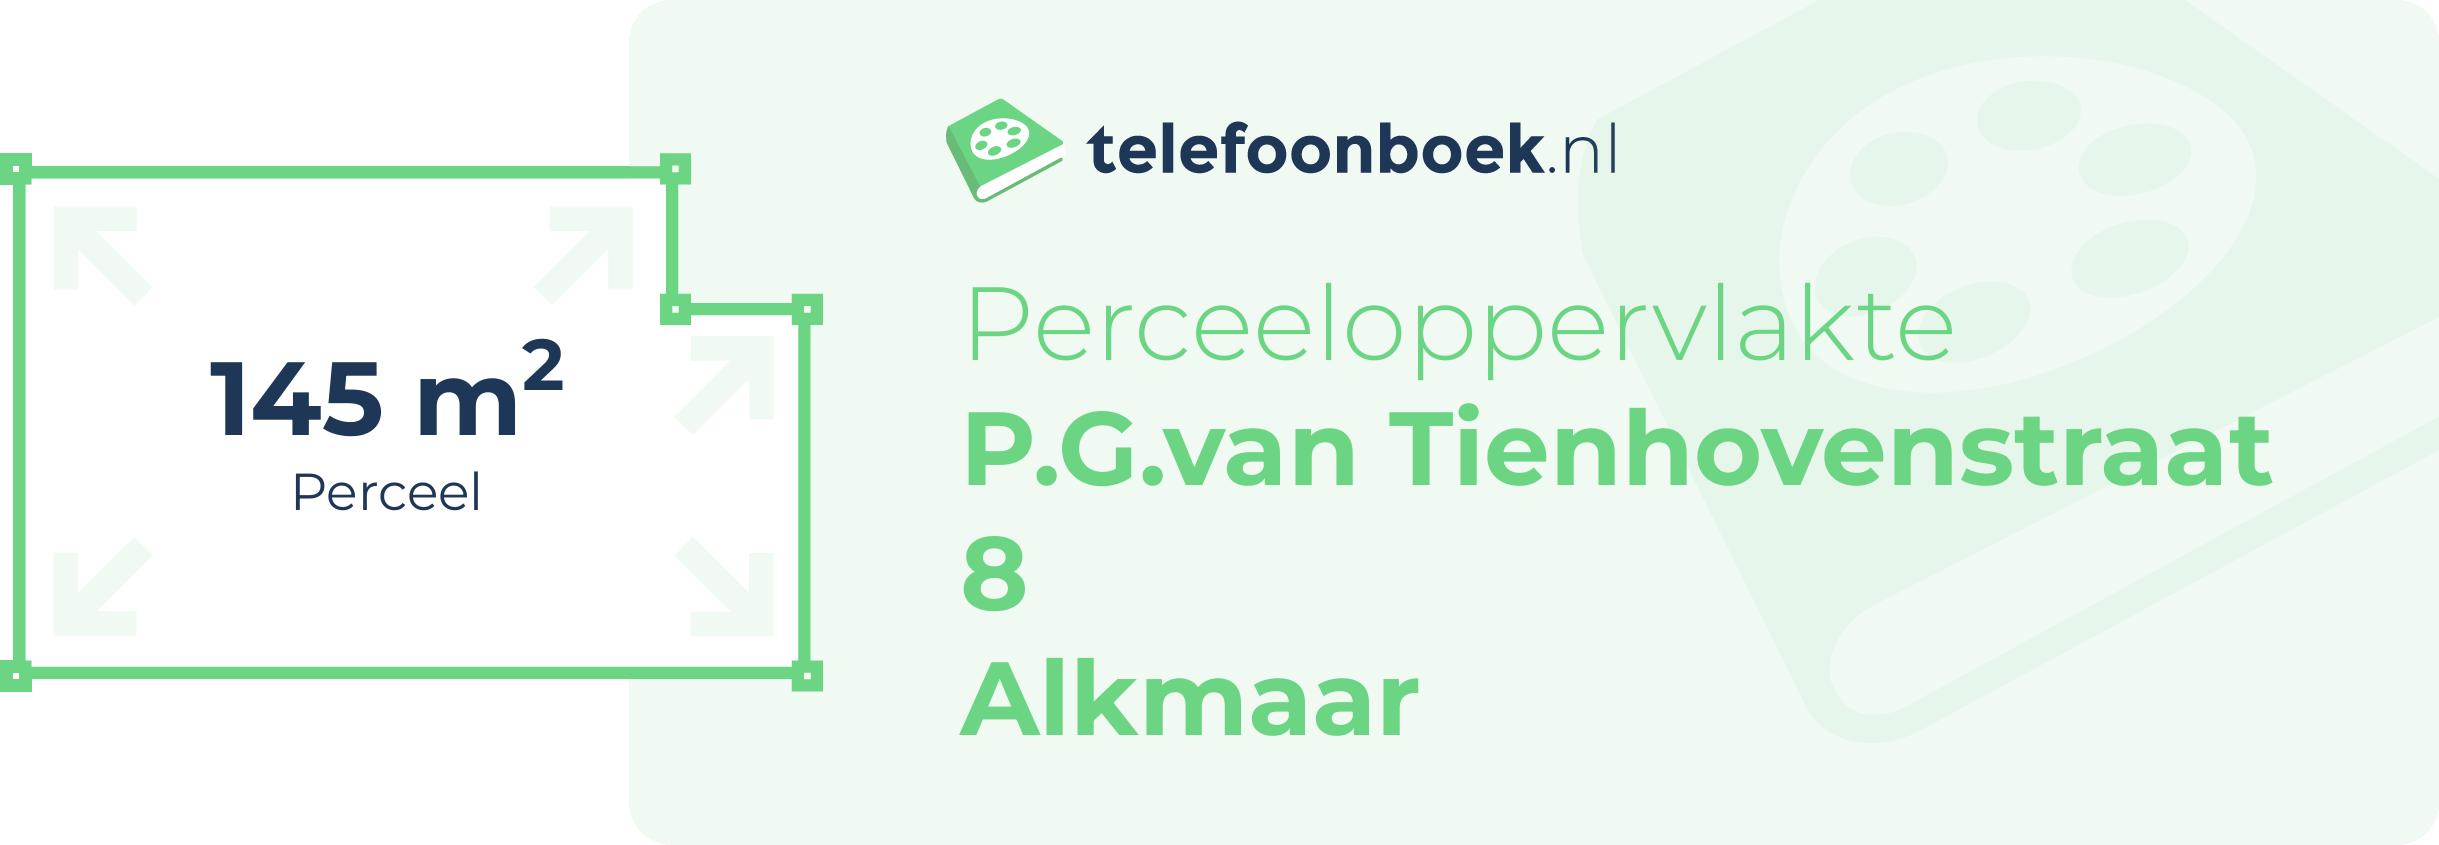 Perceeloppervlakte P.G.van Tienhovenstraat 8 Alkmaar